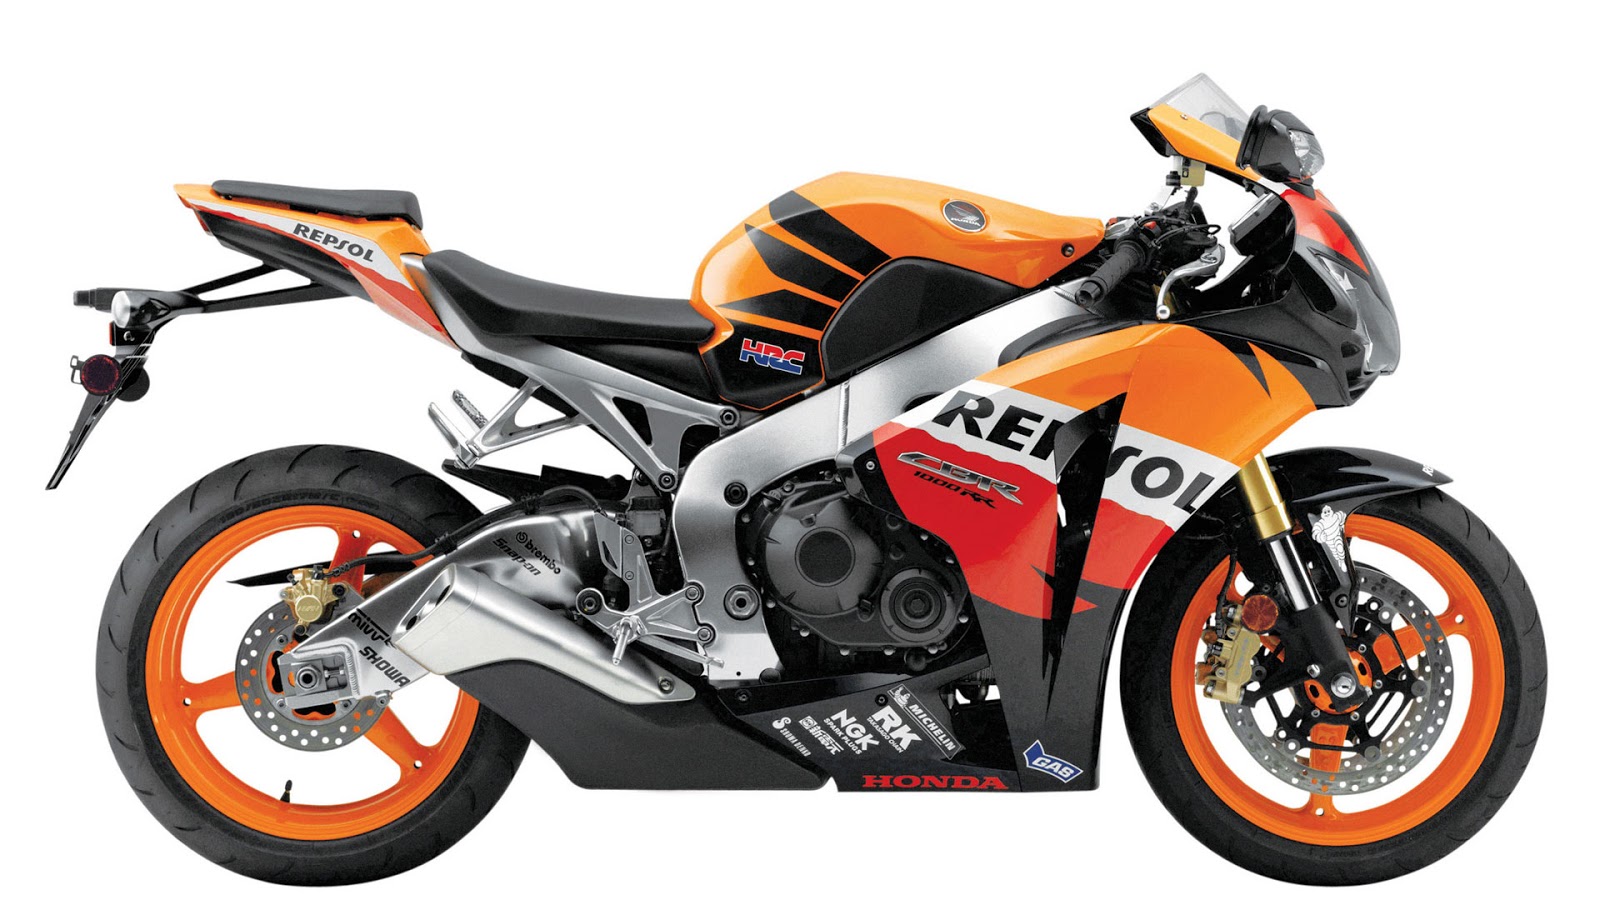 yamaha sports bikes wallpapers,land vehicle,vehicle,motorcycle,orange,superbike racing